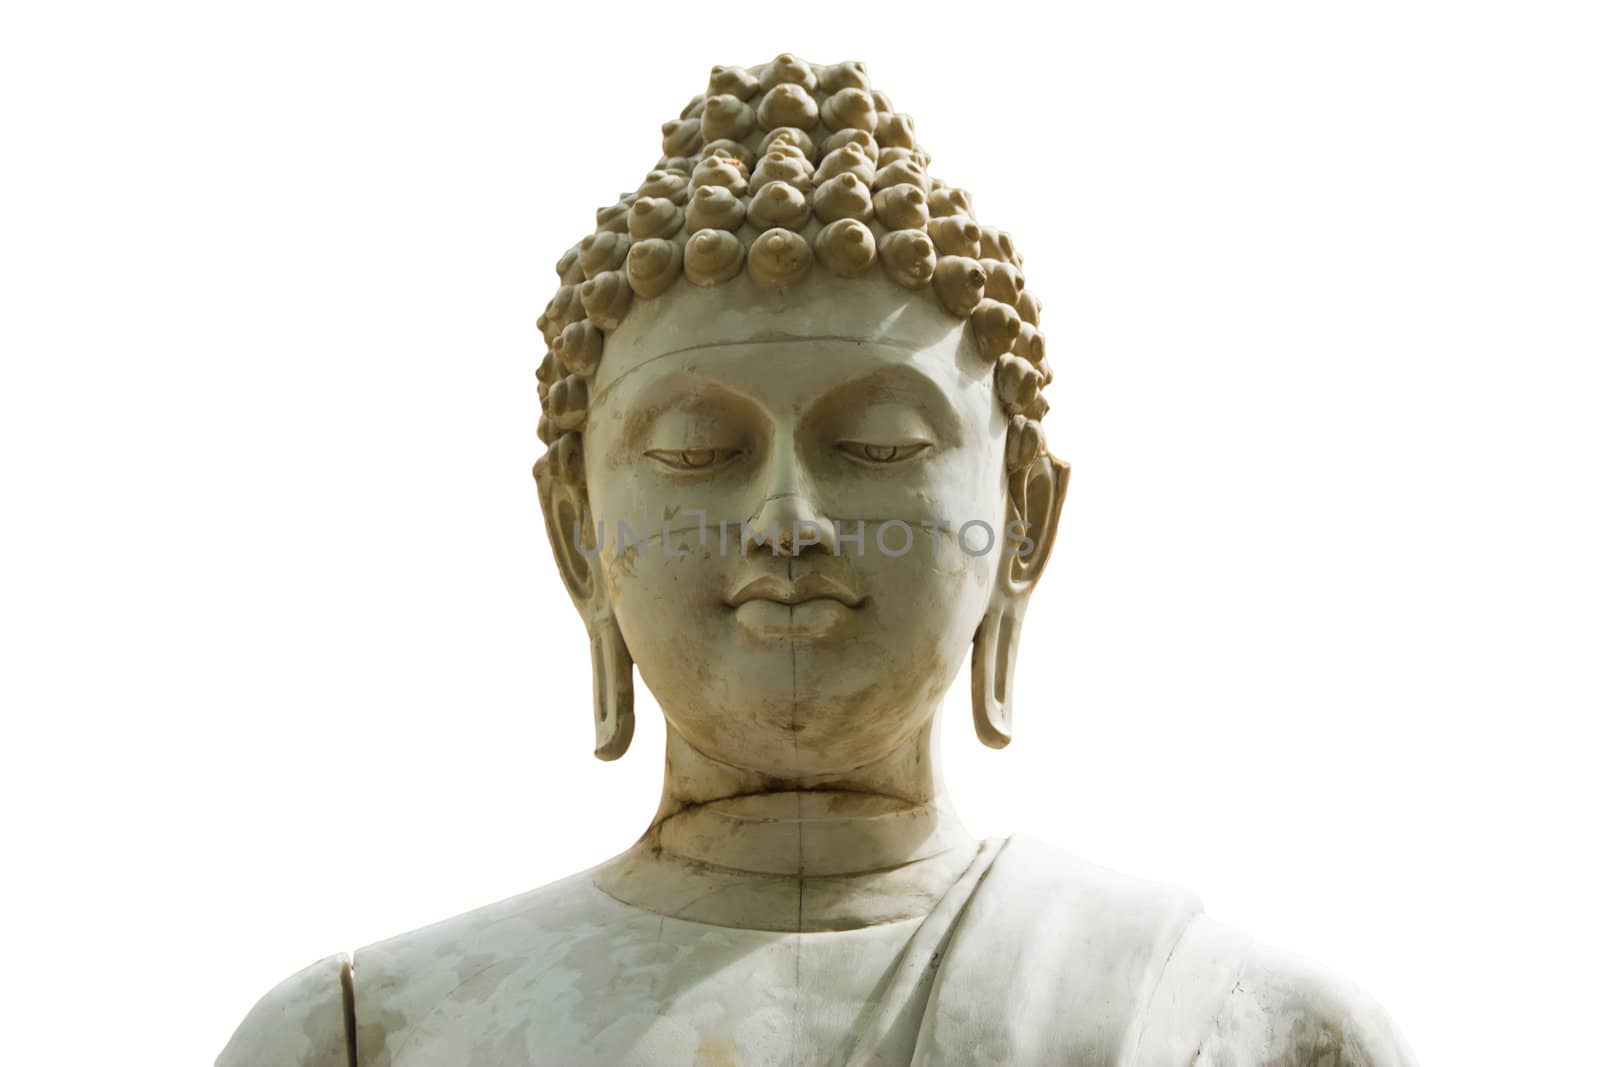 ancient Buddha face, Ayutthaya, Thailand  by wasan_gredpree